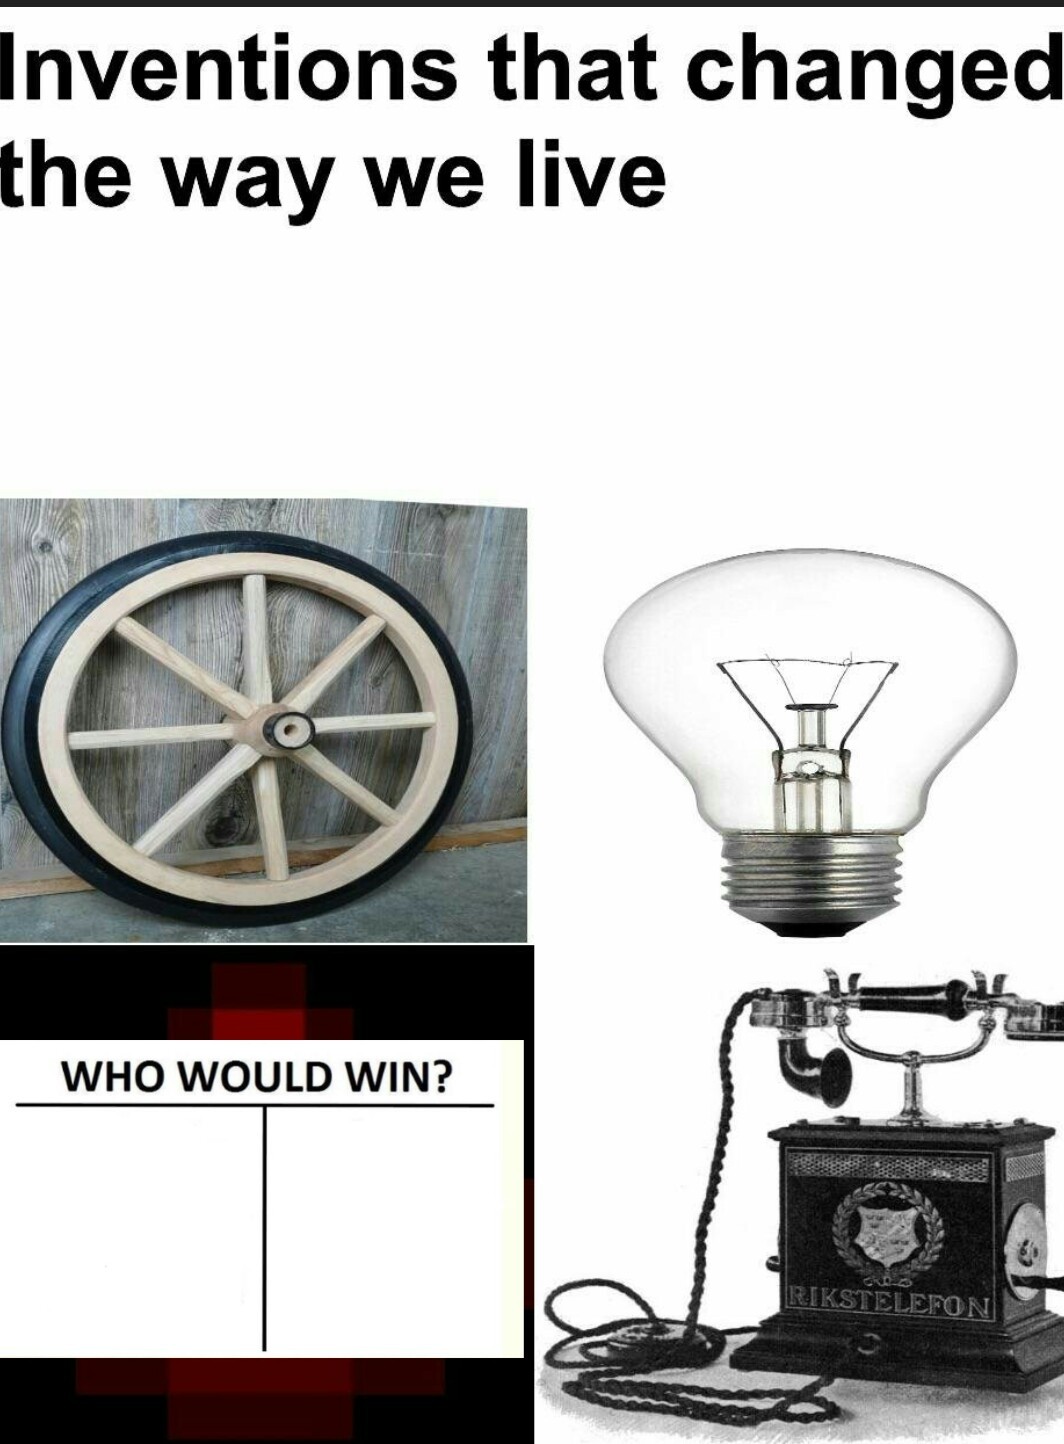 Anyone know any good "who'd win" memes